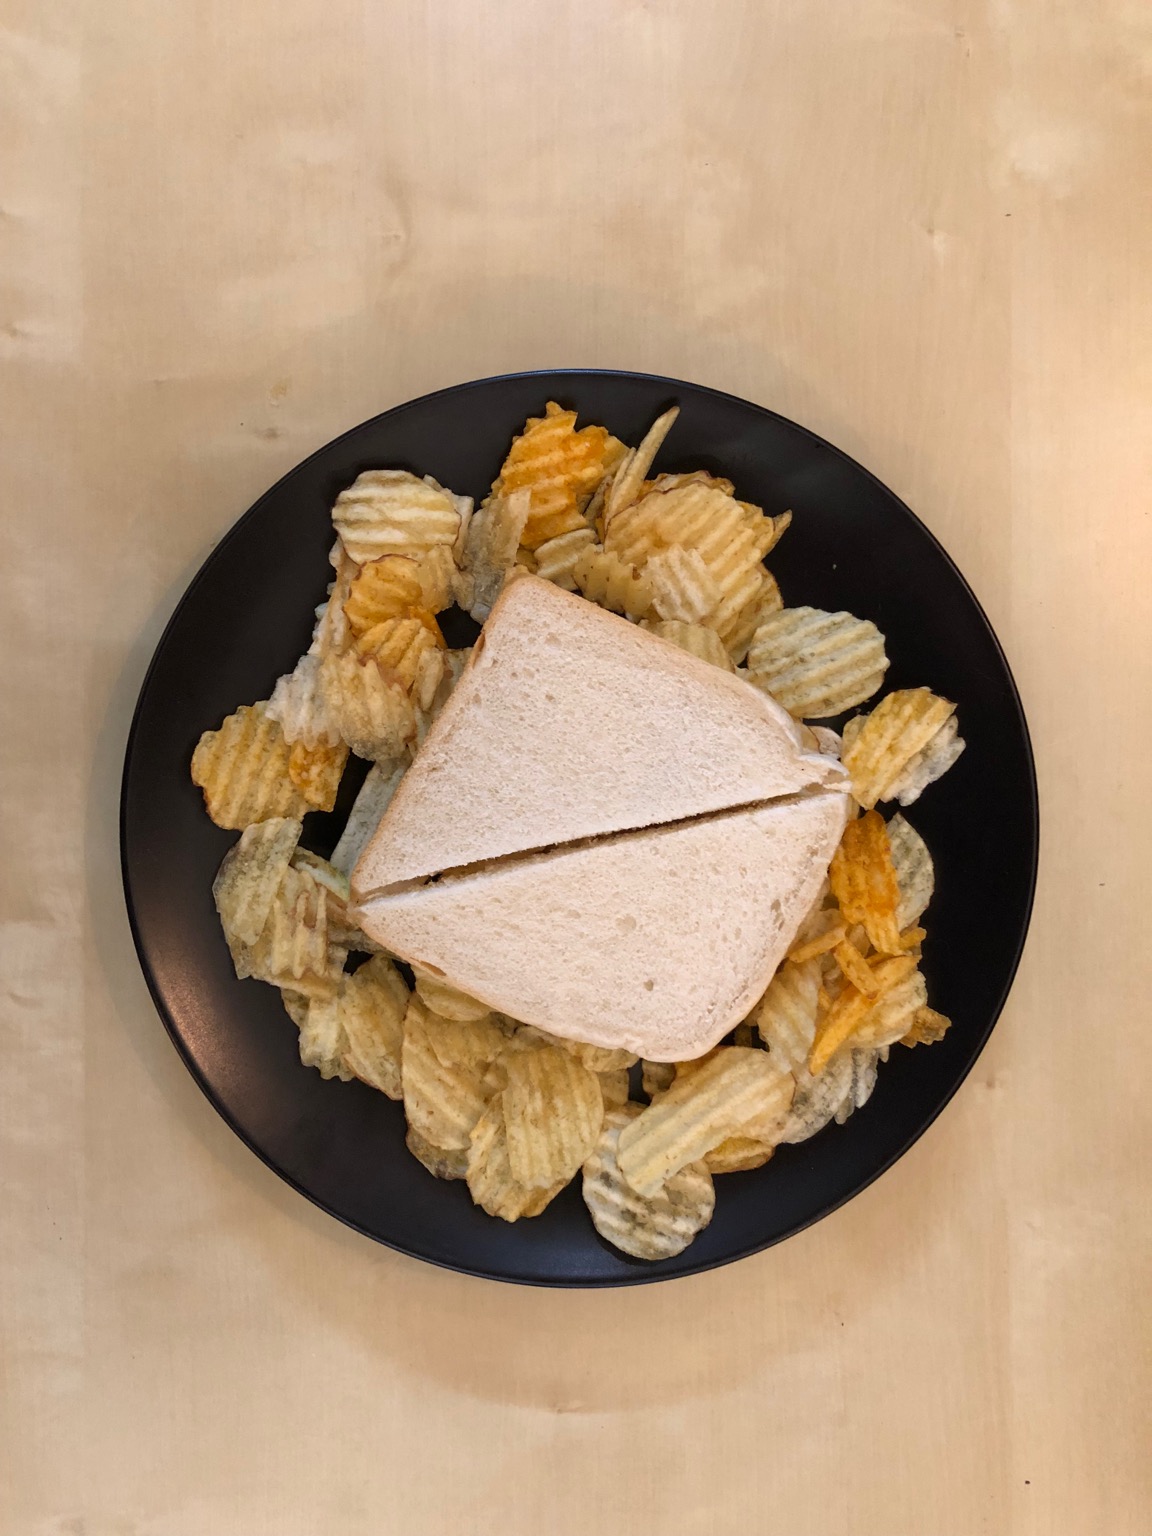 Overhead view of crisps surrounding a sandwich